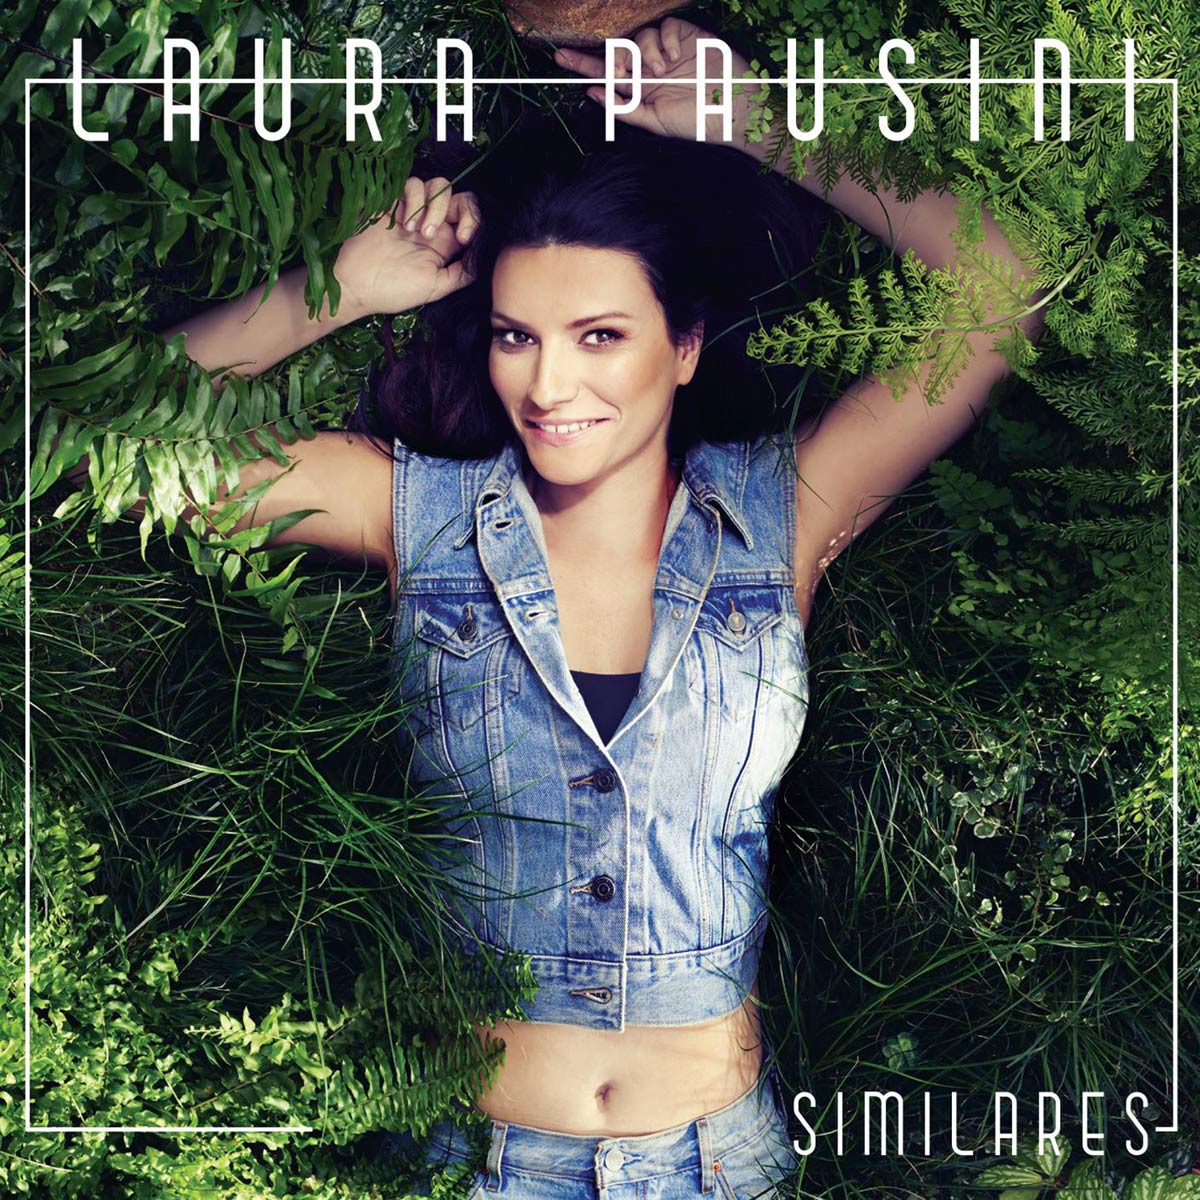 Nuevo disco de Laura Pausini